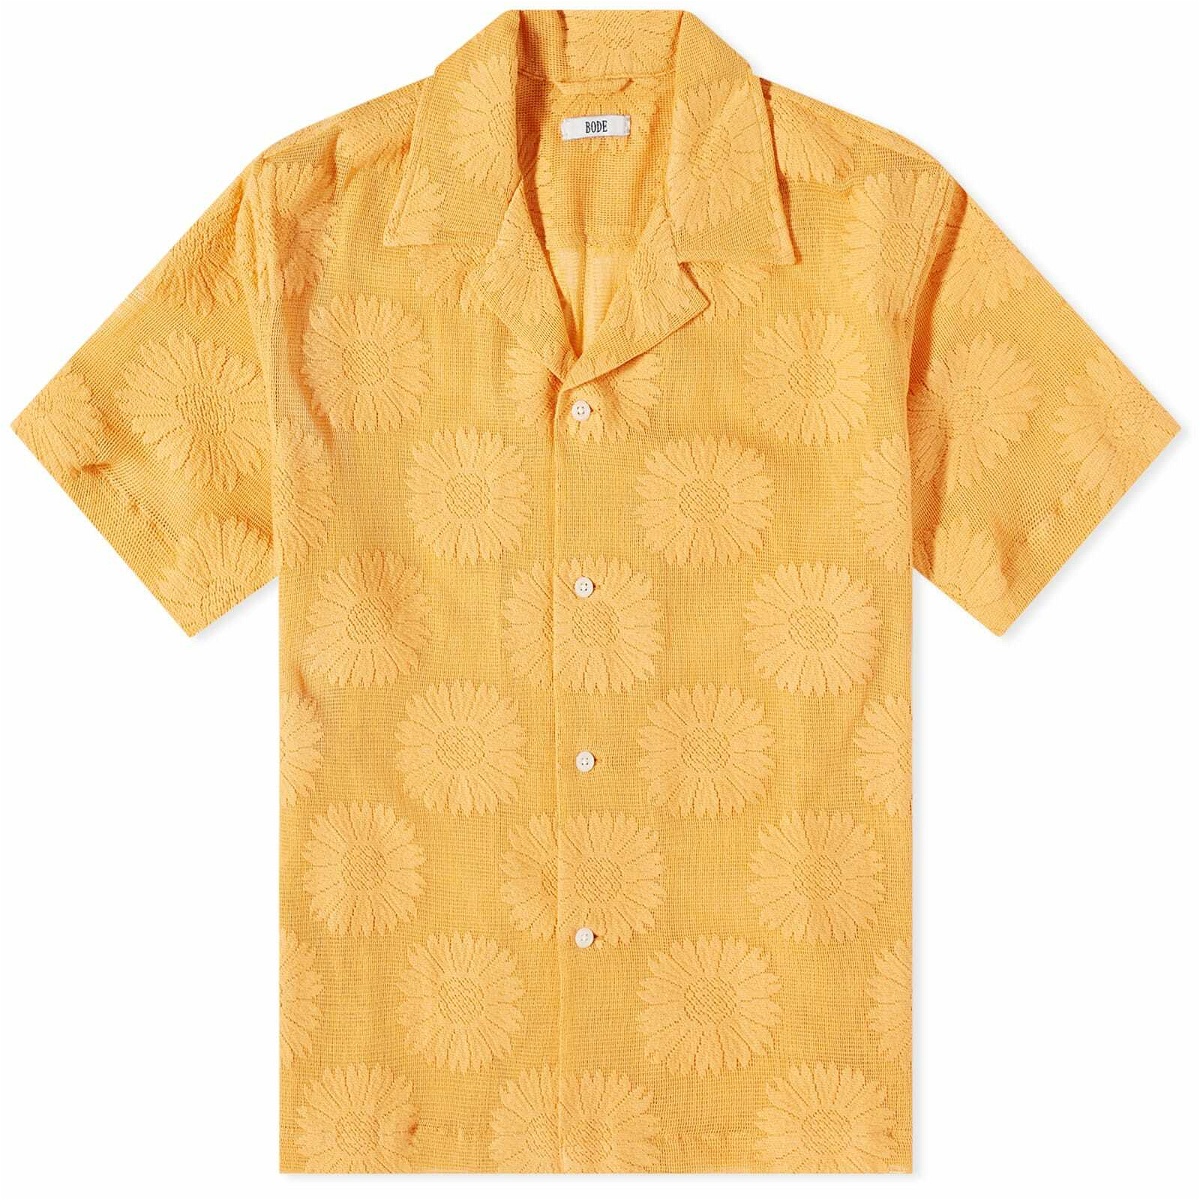 Bode Men's Sunflower Lace Short Sleeve Shirt in Golden Bode